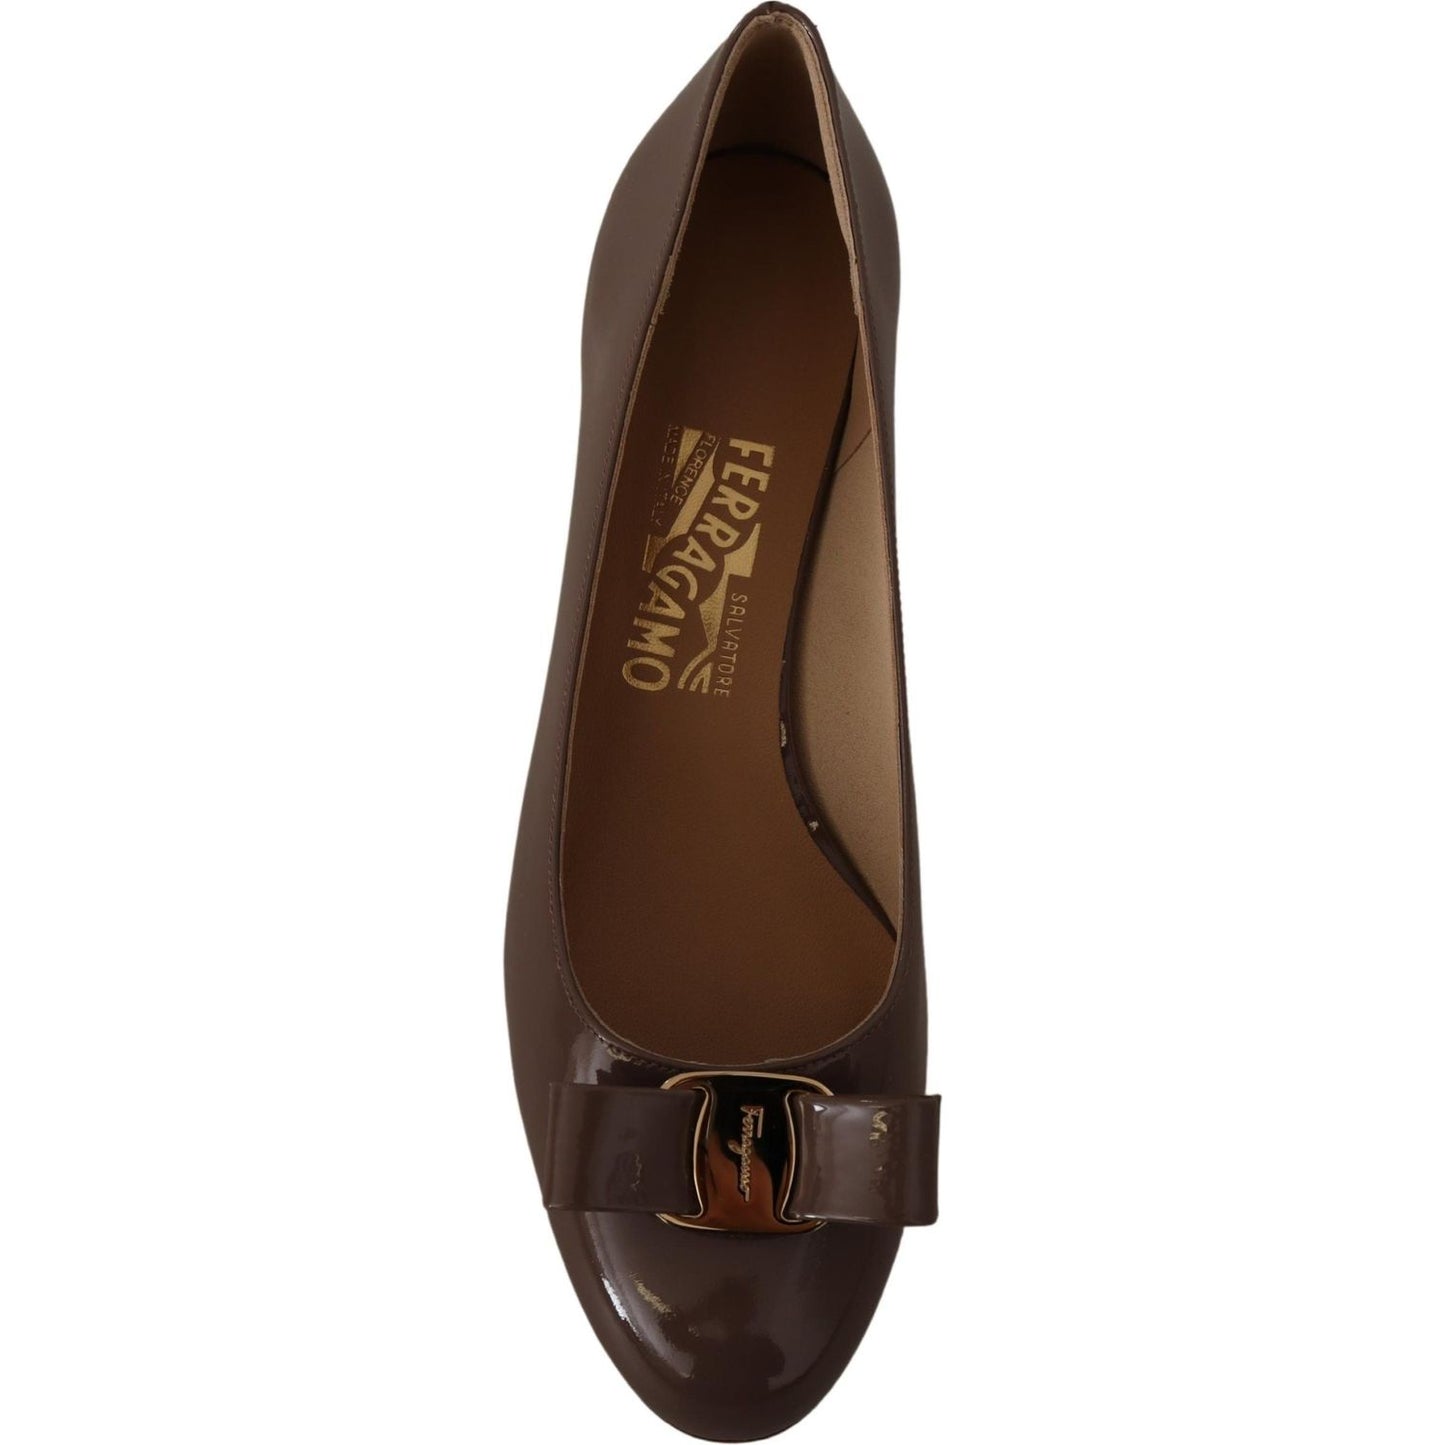 Salvatore Ferragamo Elegant Caraway Brown Pumps with Vara Bow WOMAN PUMPS brown-naplak-calf-leather-pumps-shoes